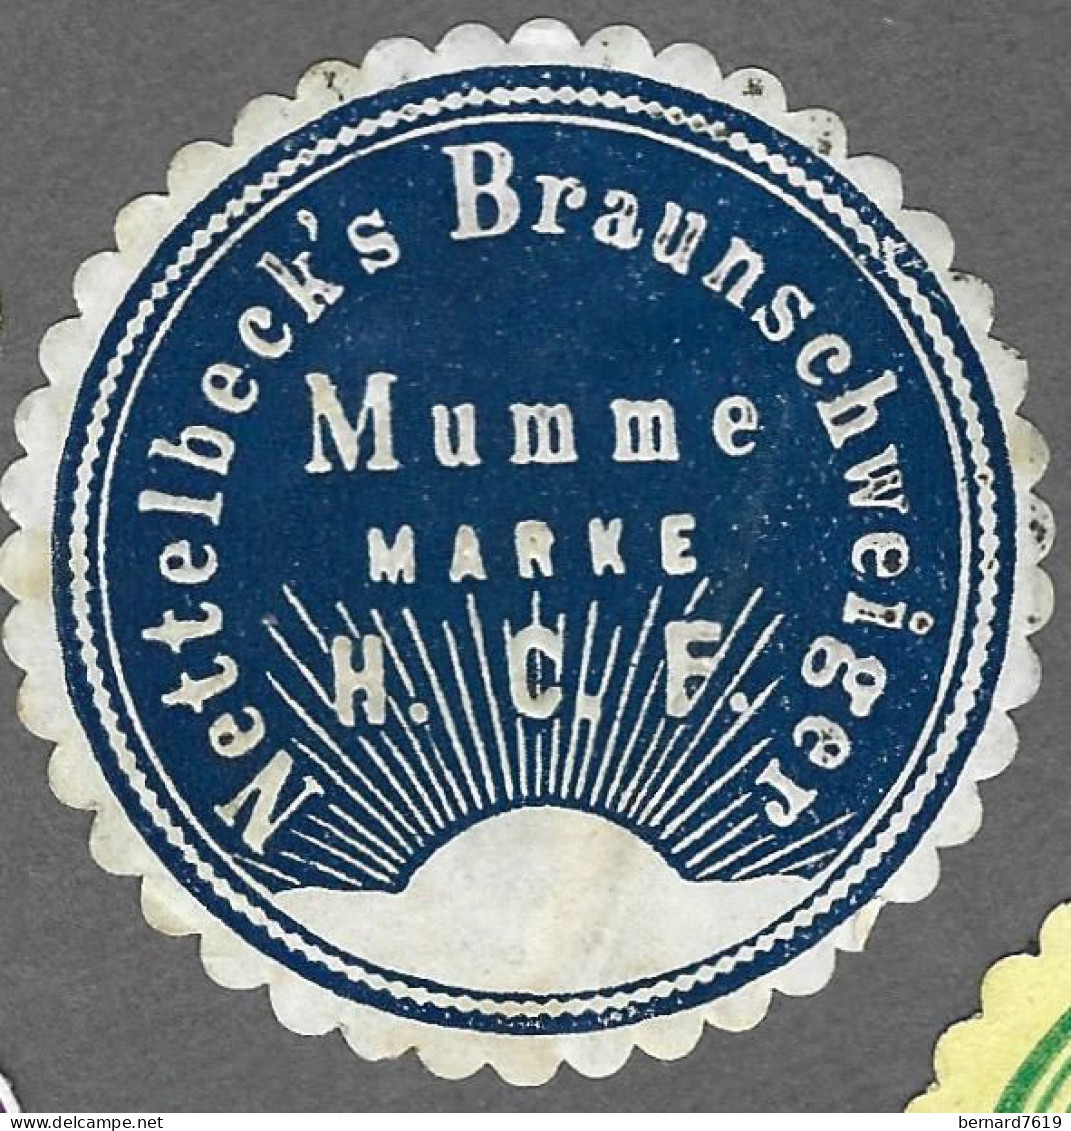 Cachet De Fermeture   -  Allemagne  - Mumme  Marke   - Nettelbeck's  Braunschwiger - Erinnophilie